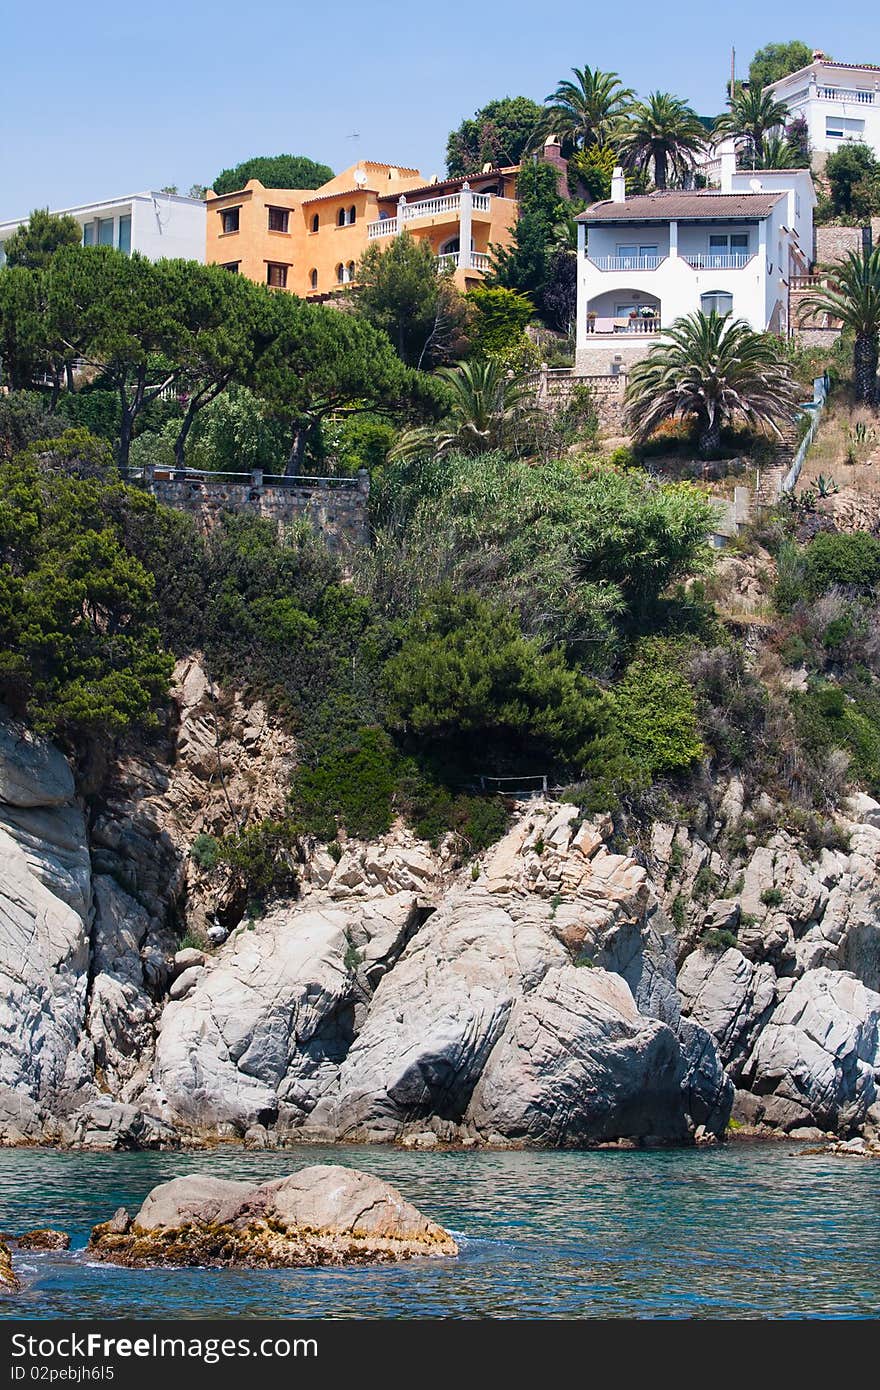 Villas on the scenic rocky spanish coast  - Costa Brava. Villas on the scenic rocky spanish coast  - Costa Brava